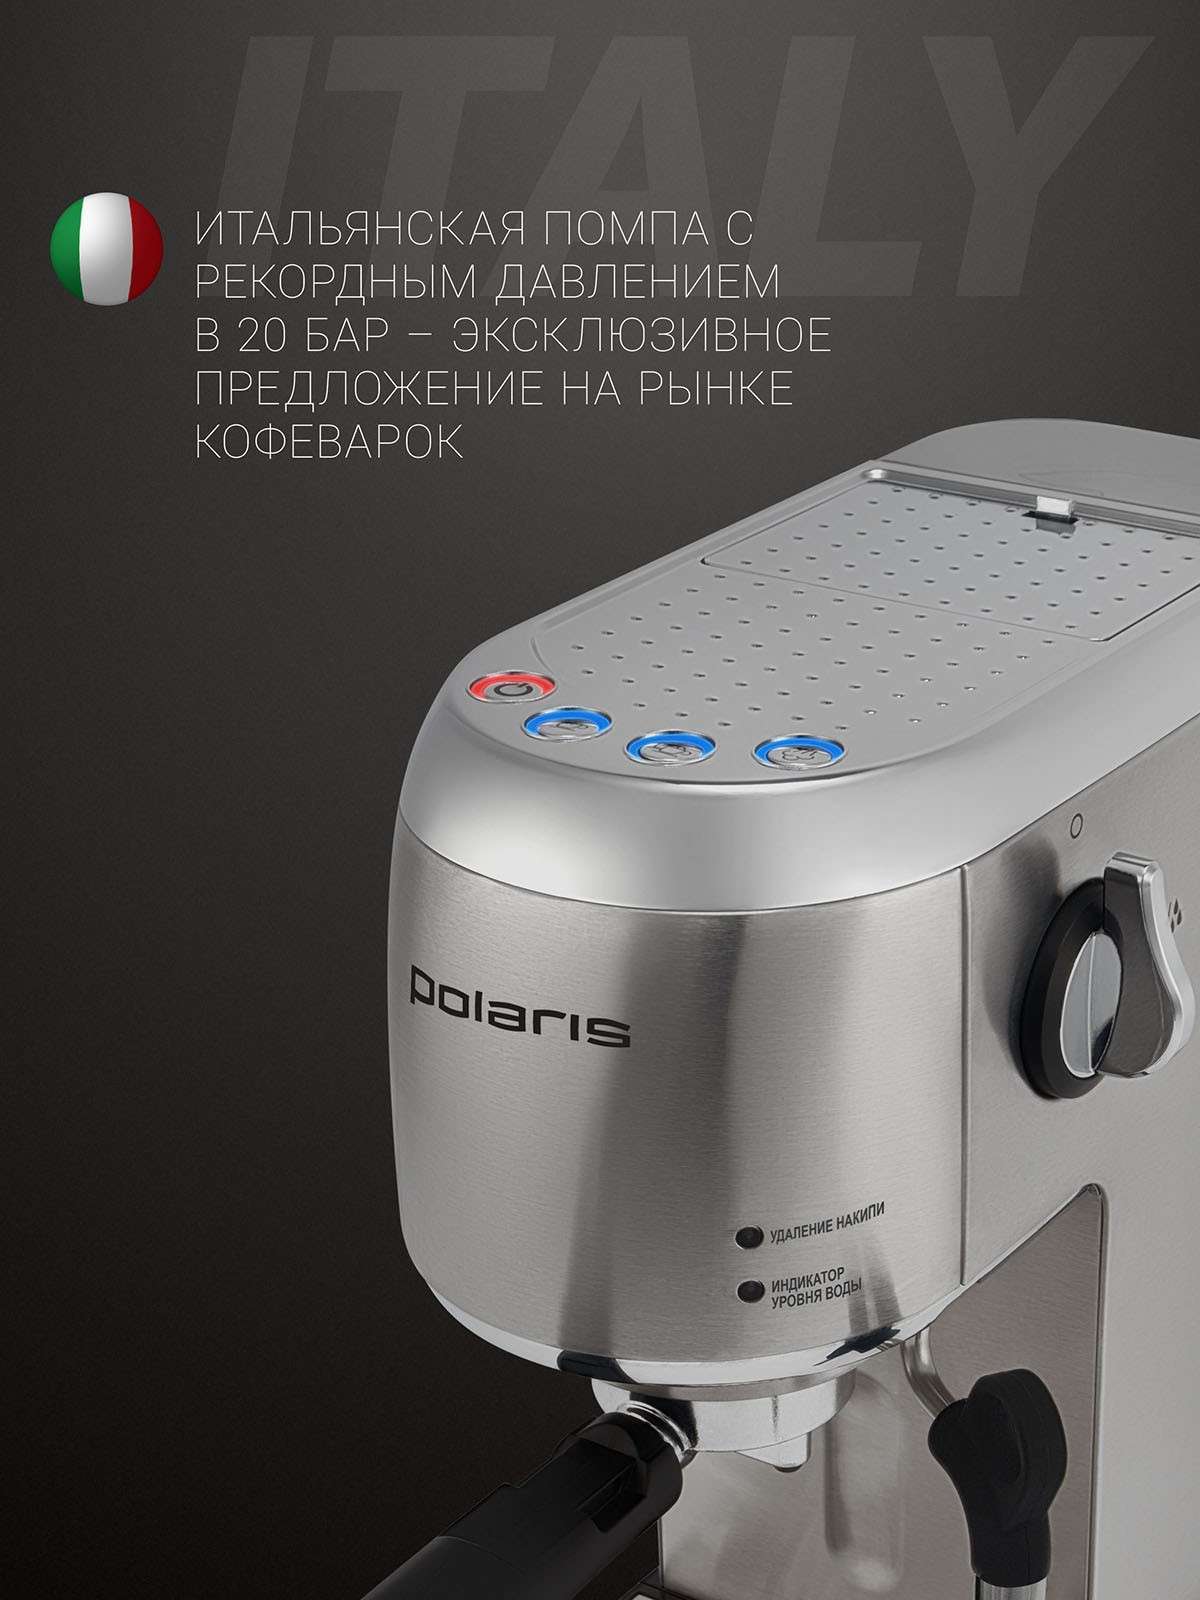 Kavos aparatas Polaris PCM 2001AE Adore Crema espresso